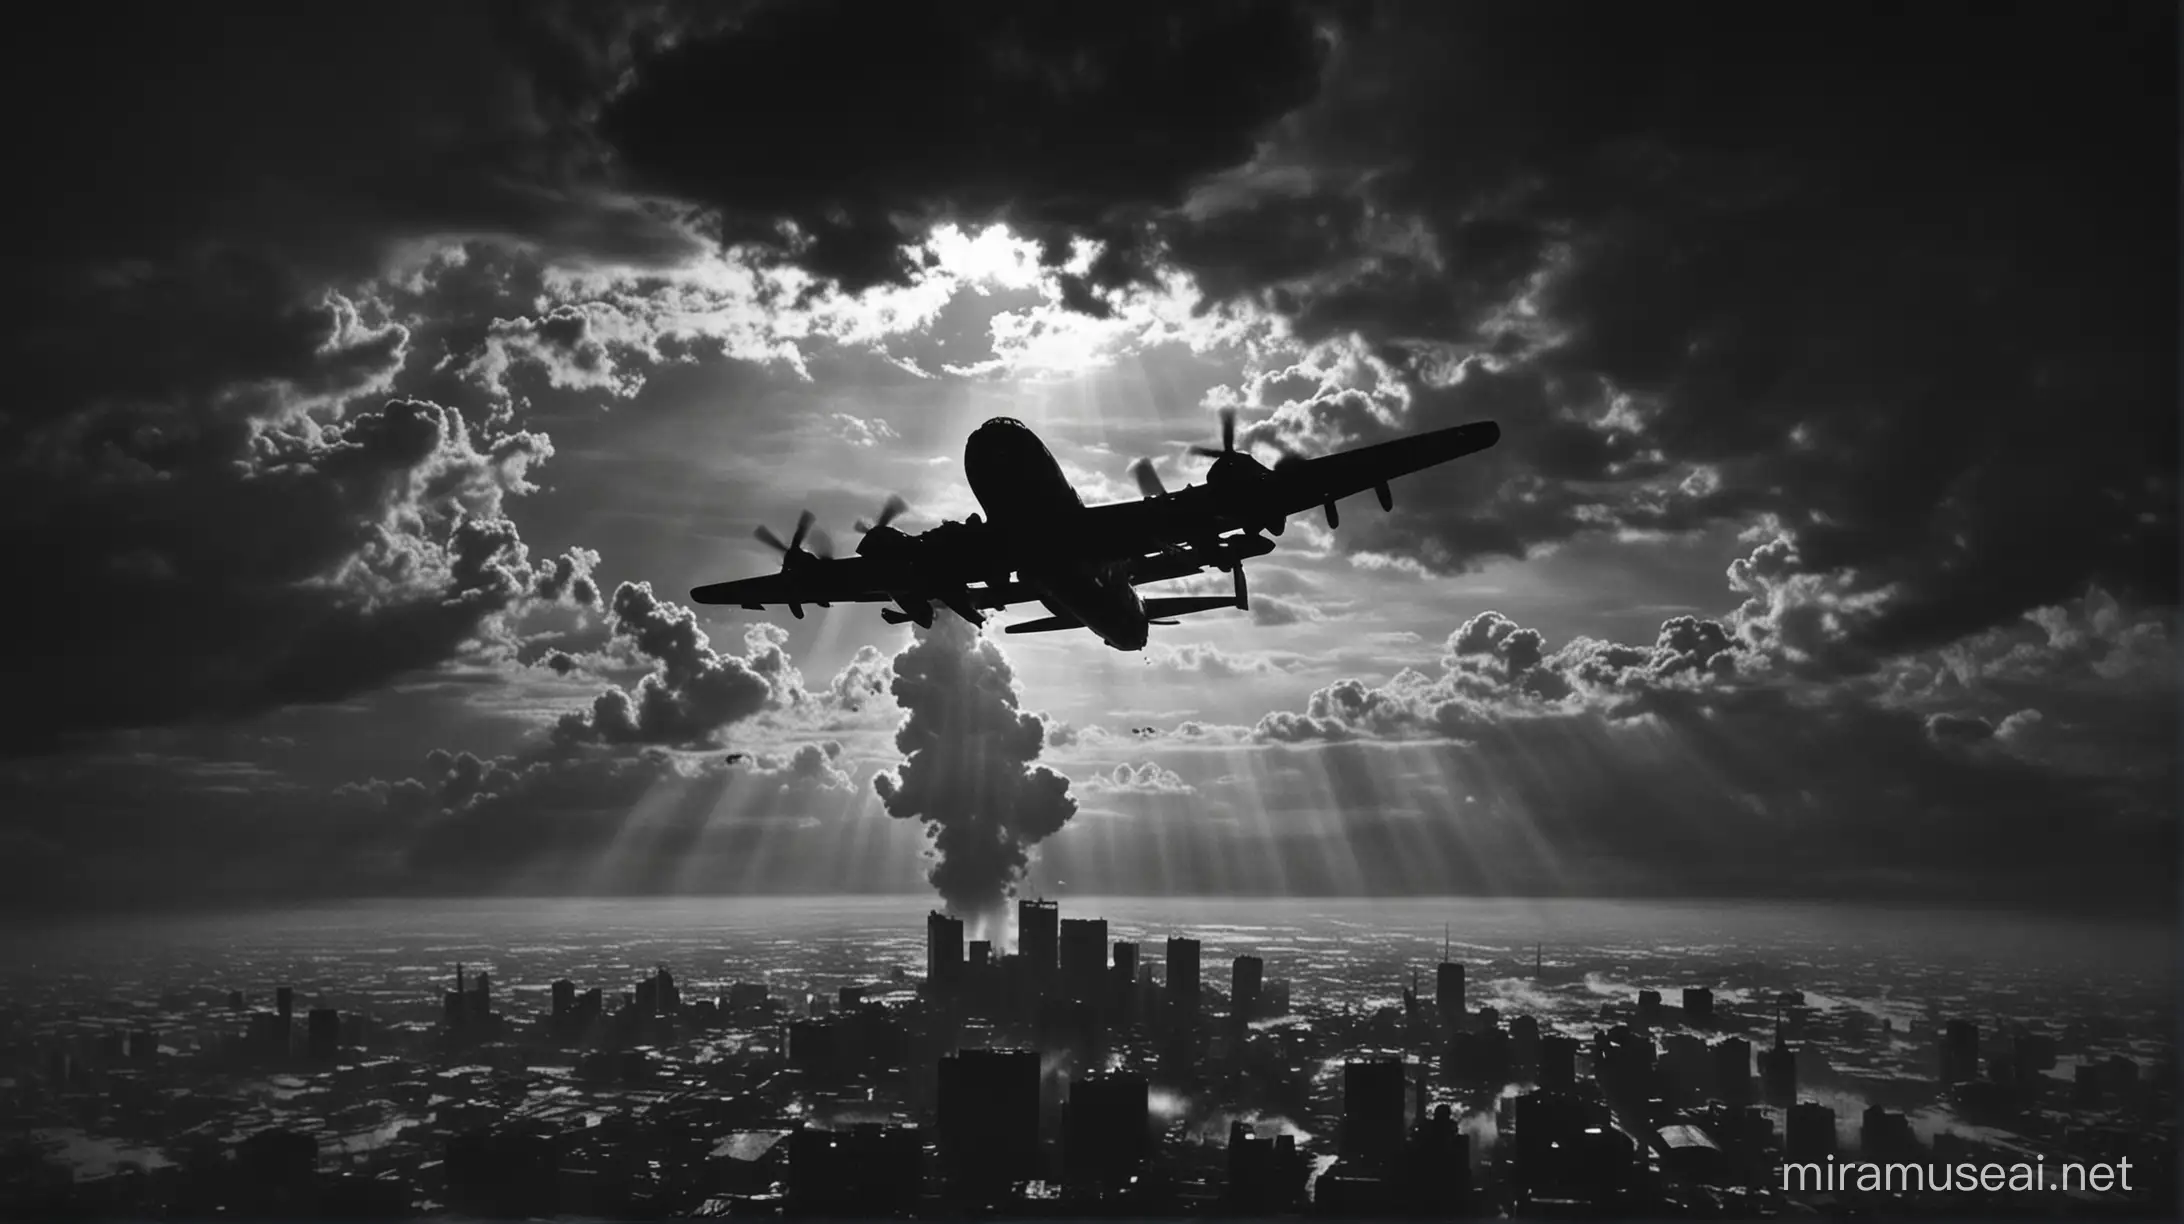 B29 American Bomber Silhouette in Hiroshima Nuclear Explosion Mushroom Cloud